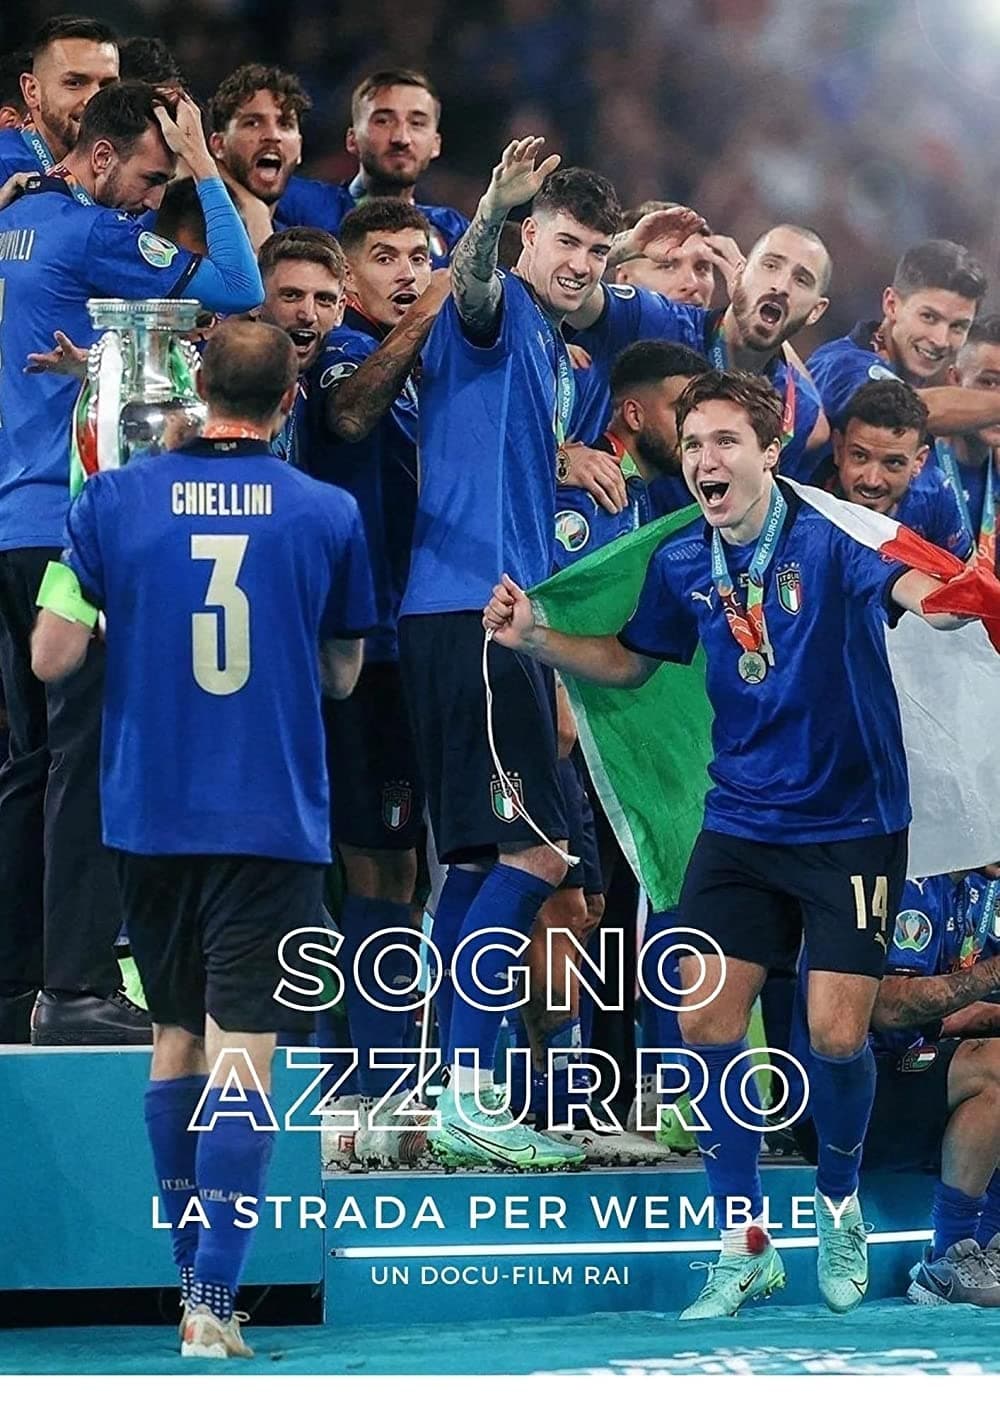 Azzurri The Italian Dream at UEFA EURO 2020